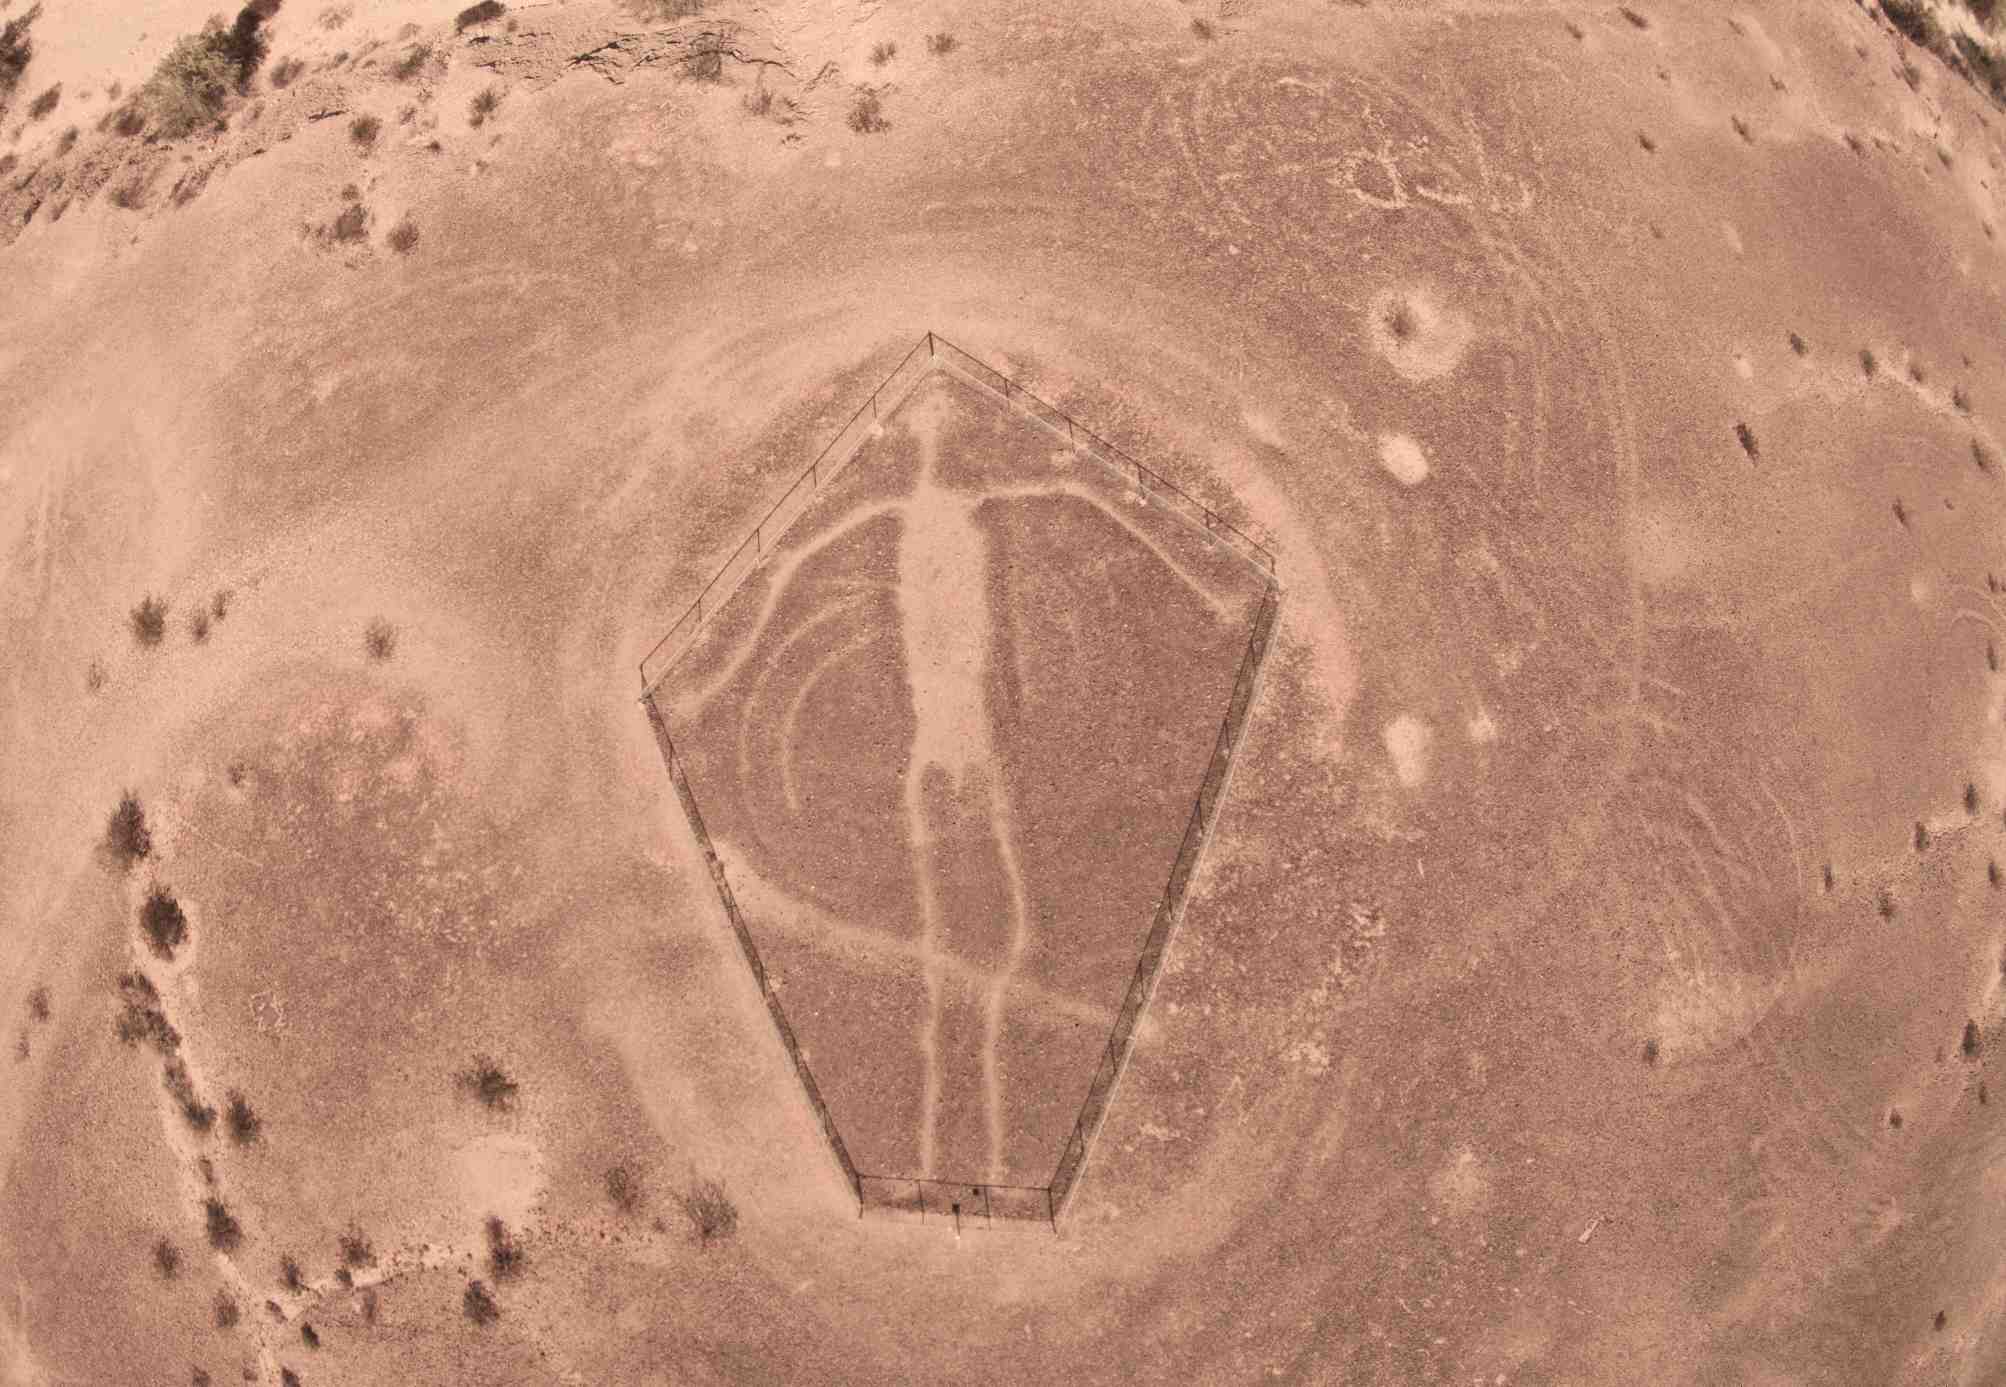 Blythe Intaglios: The impressive anthropomorphic geoglyphs of the Colorado Desert 18